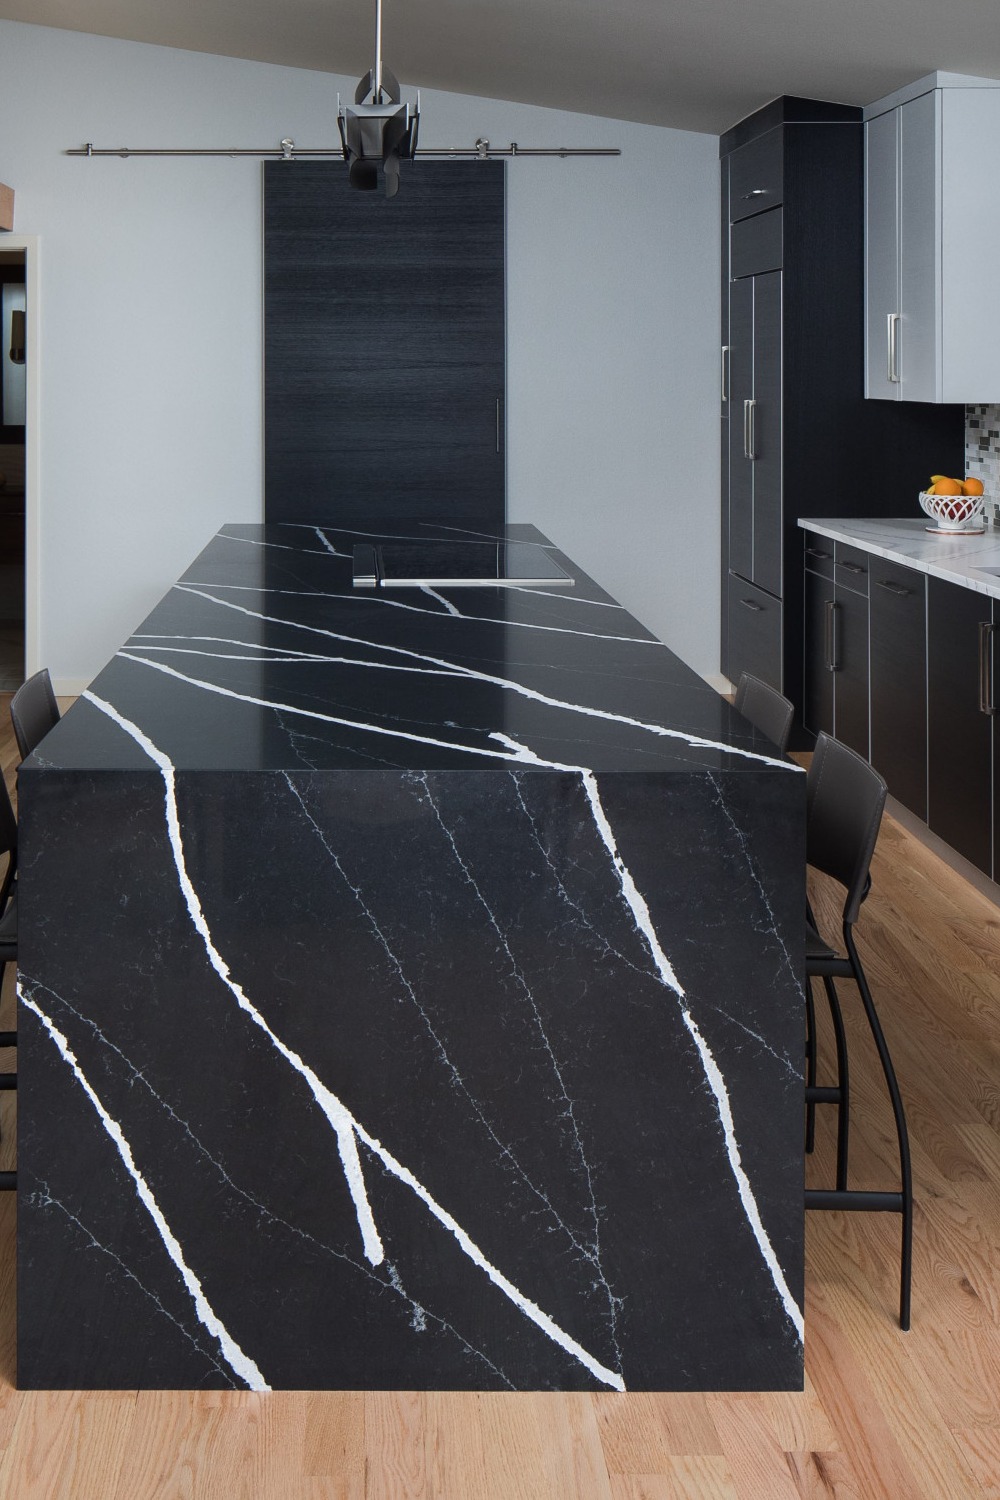 Black Quartz Countertops Design Ideas Black Veins Eye Catching Surface Durable Polished Dark Stone